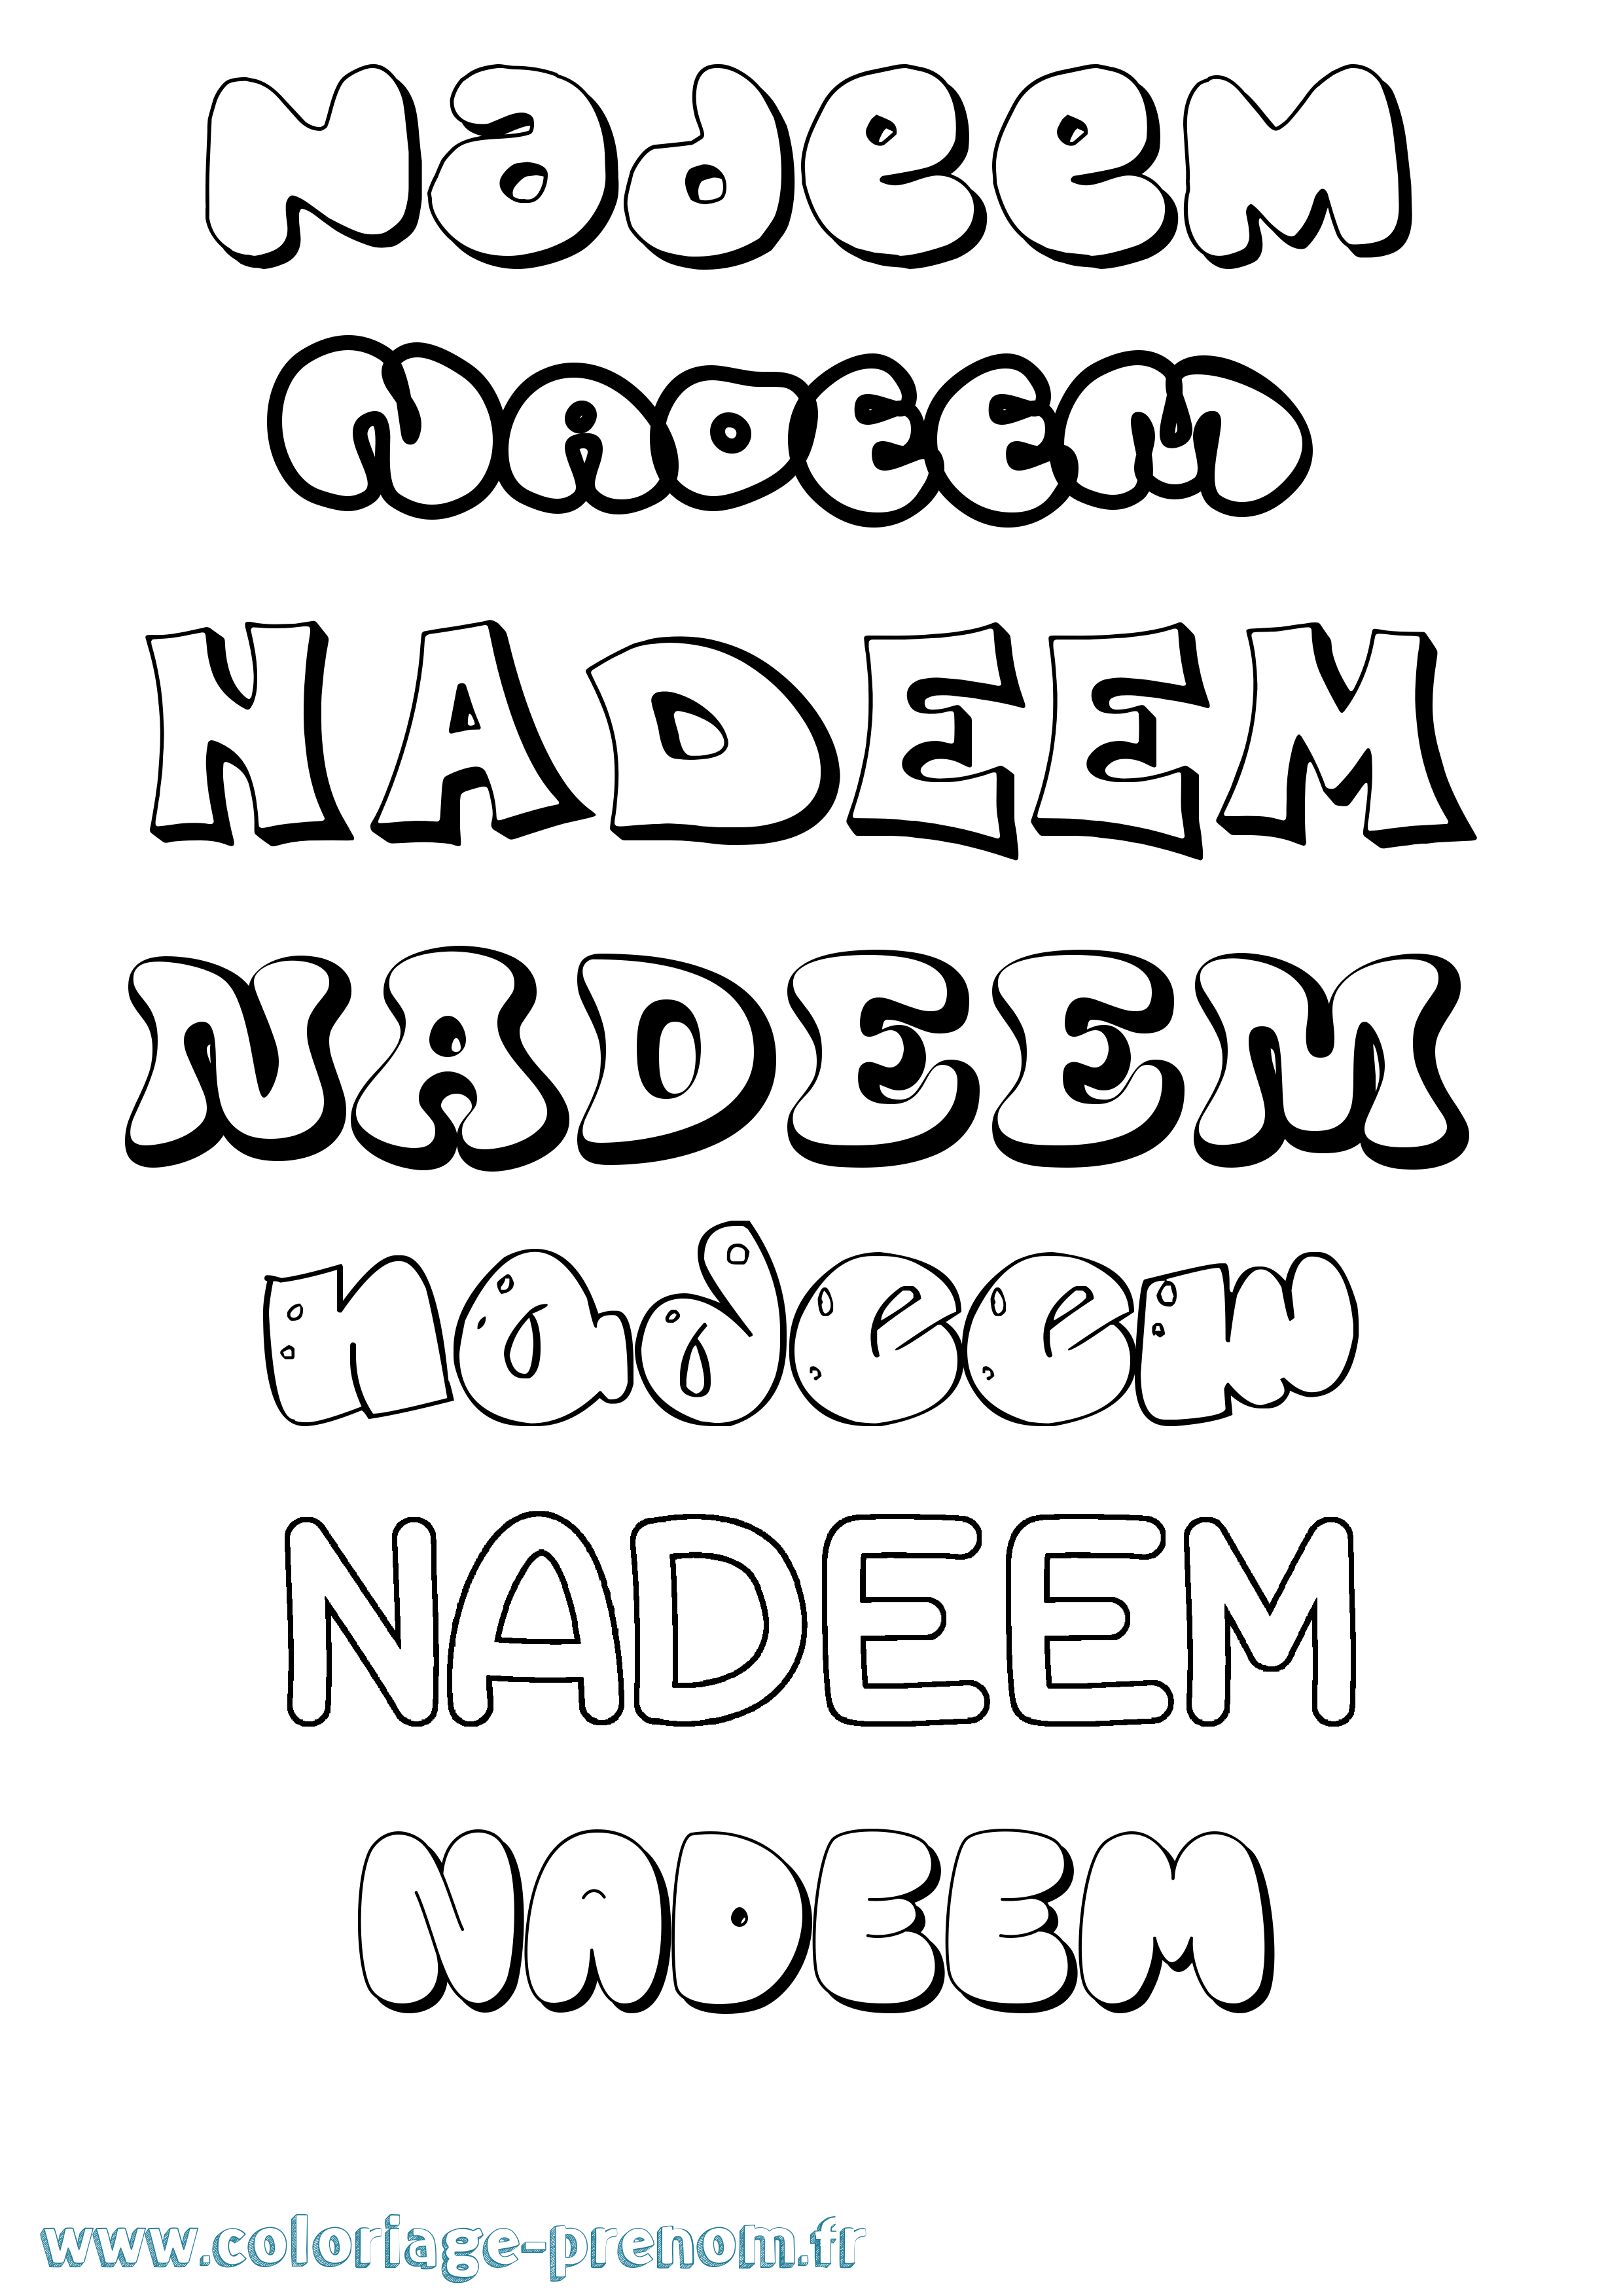 Coloriage prénom Nadeem Bubble